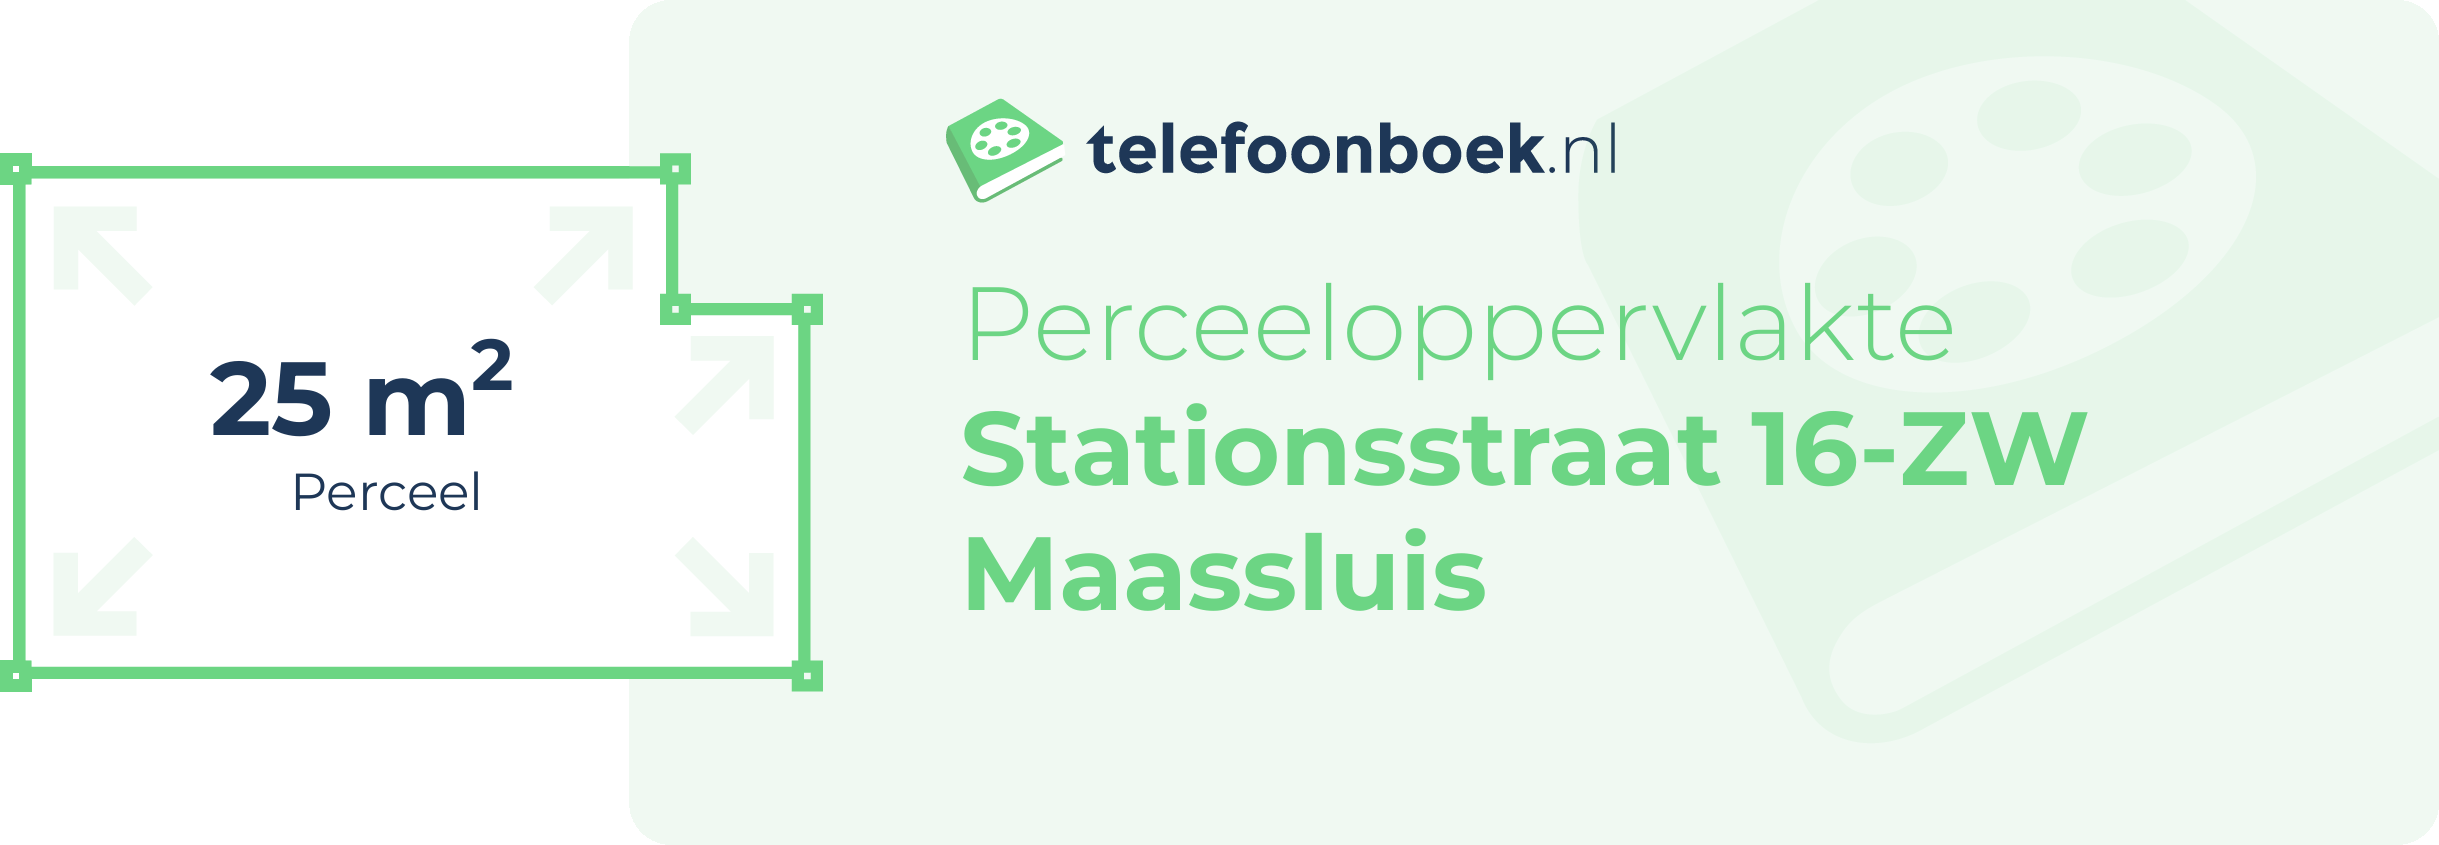 Perceeloppervlakte Stationsstraat 16-ZW Maassluis